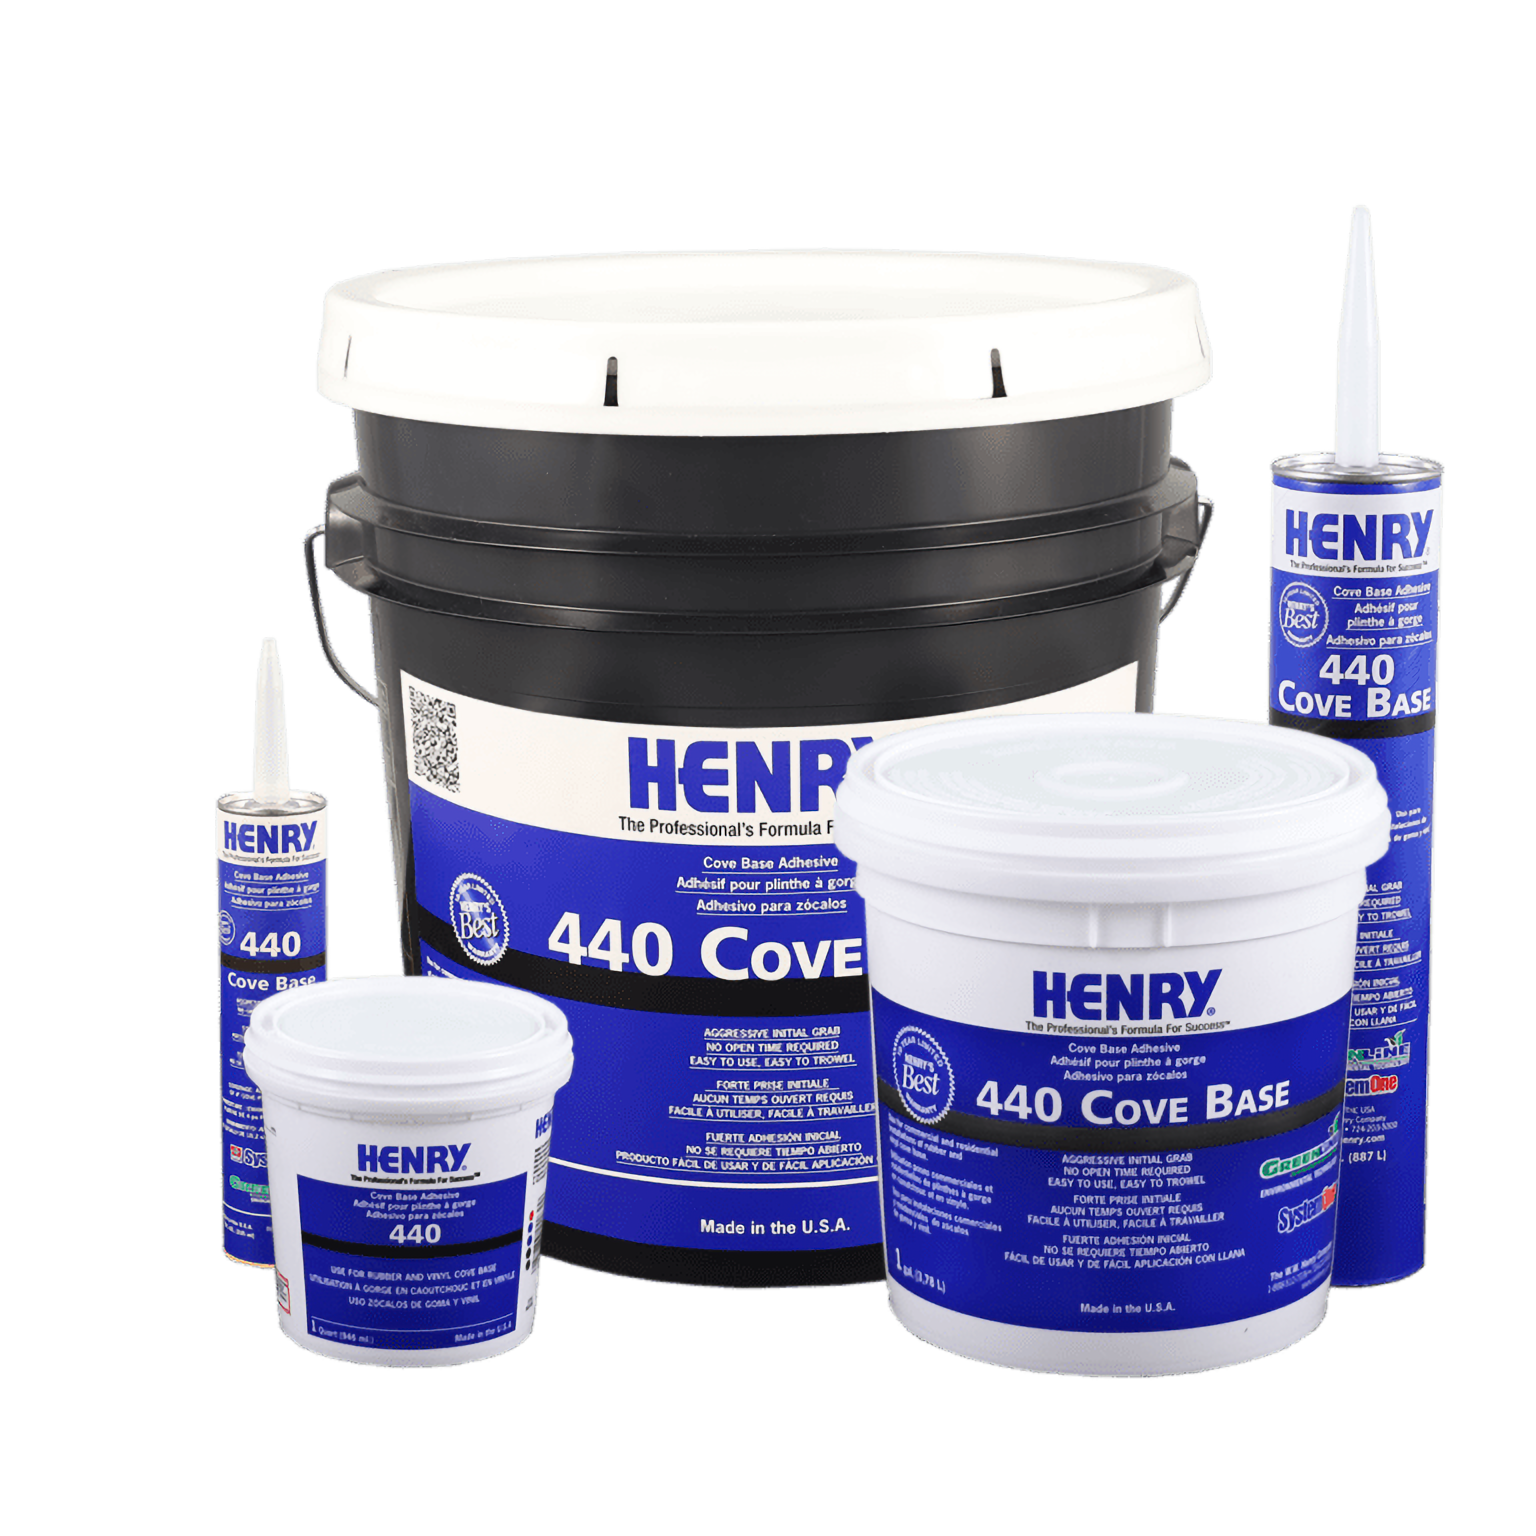 HENRY® 440 Cove Base Adhesive